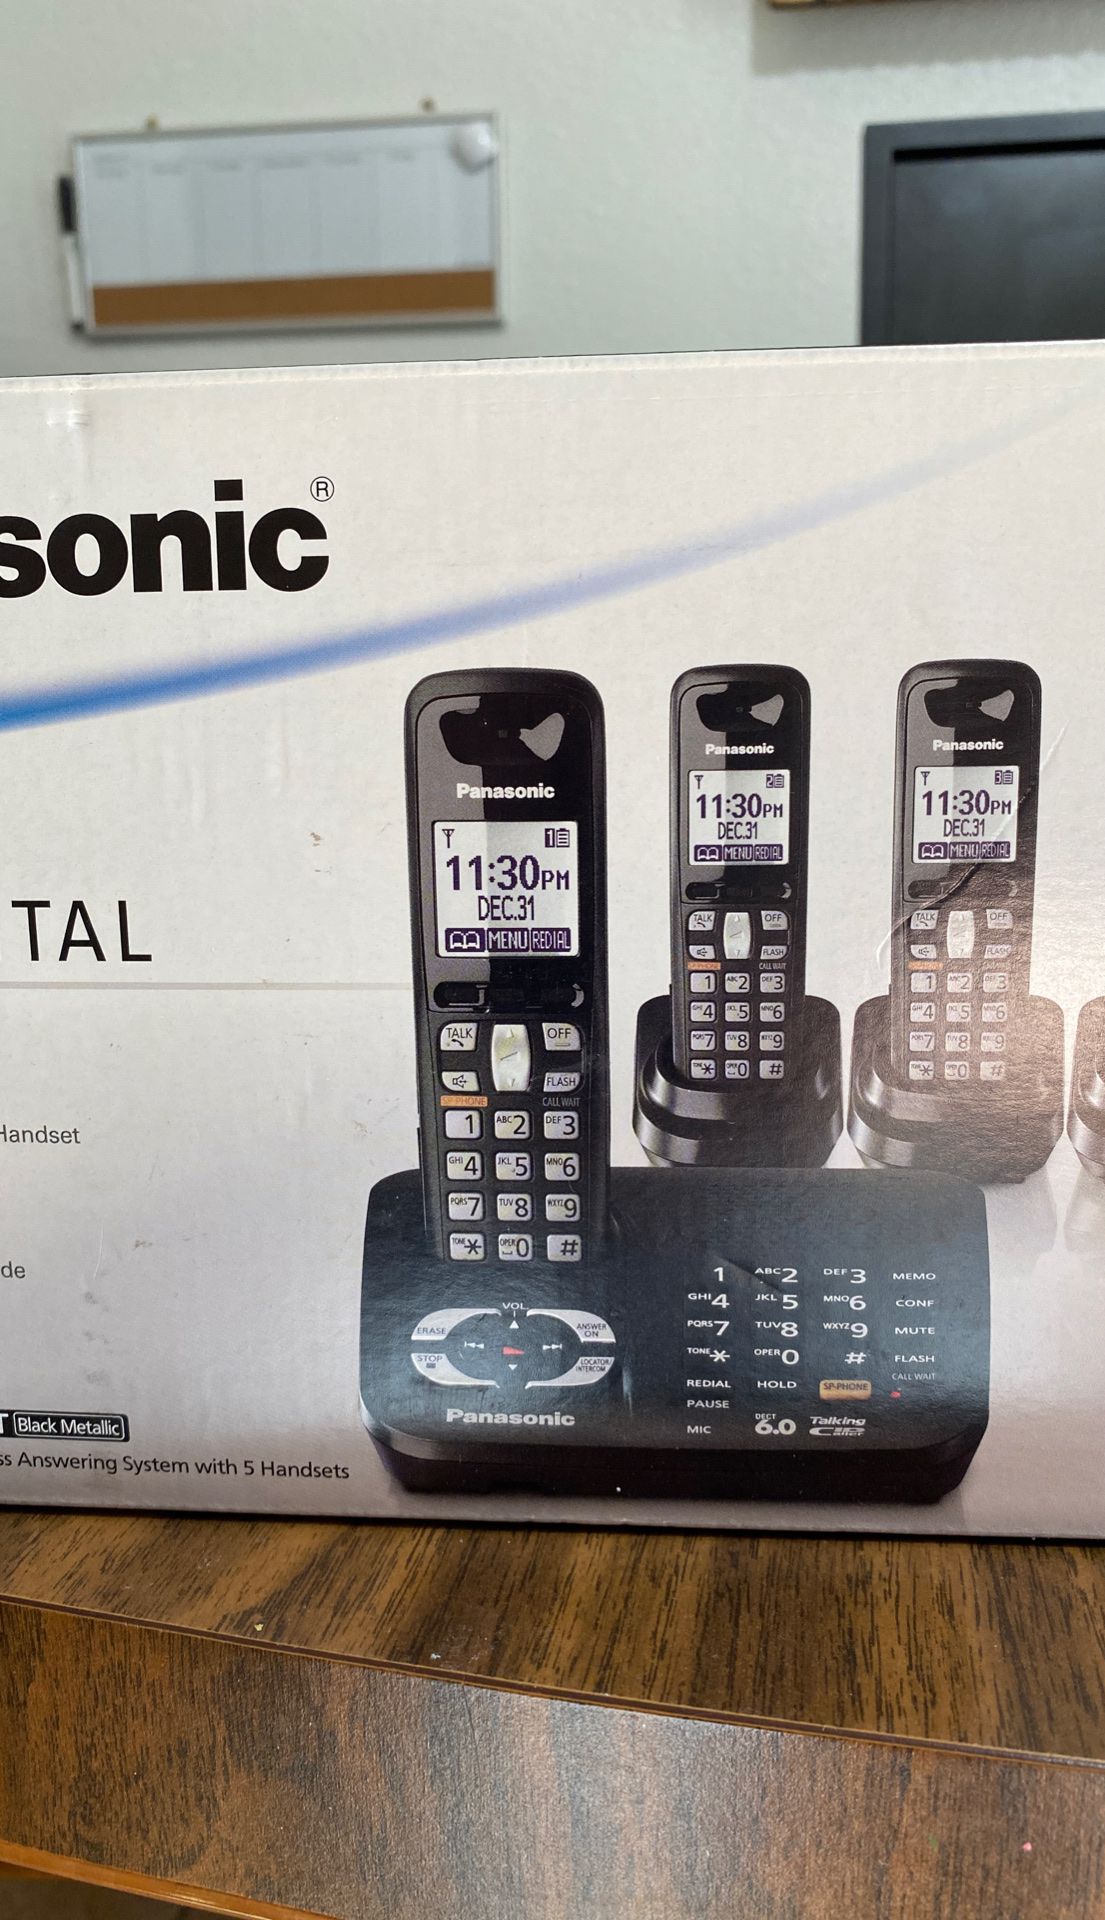 Three Panasonic cordless landline phones